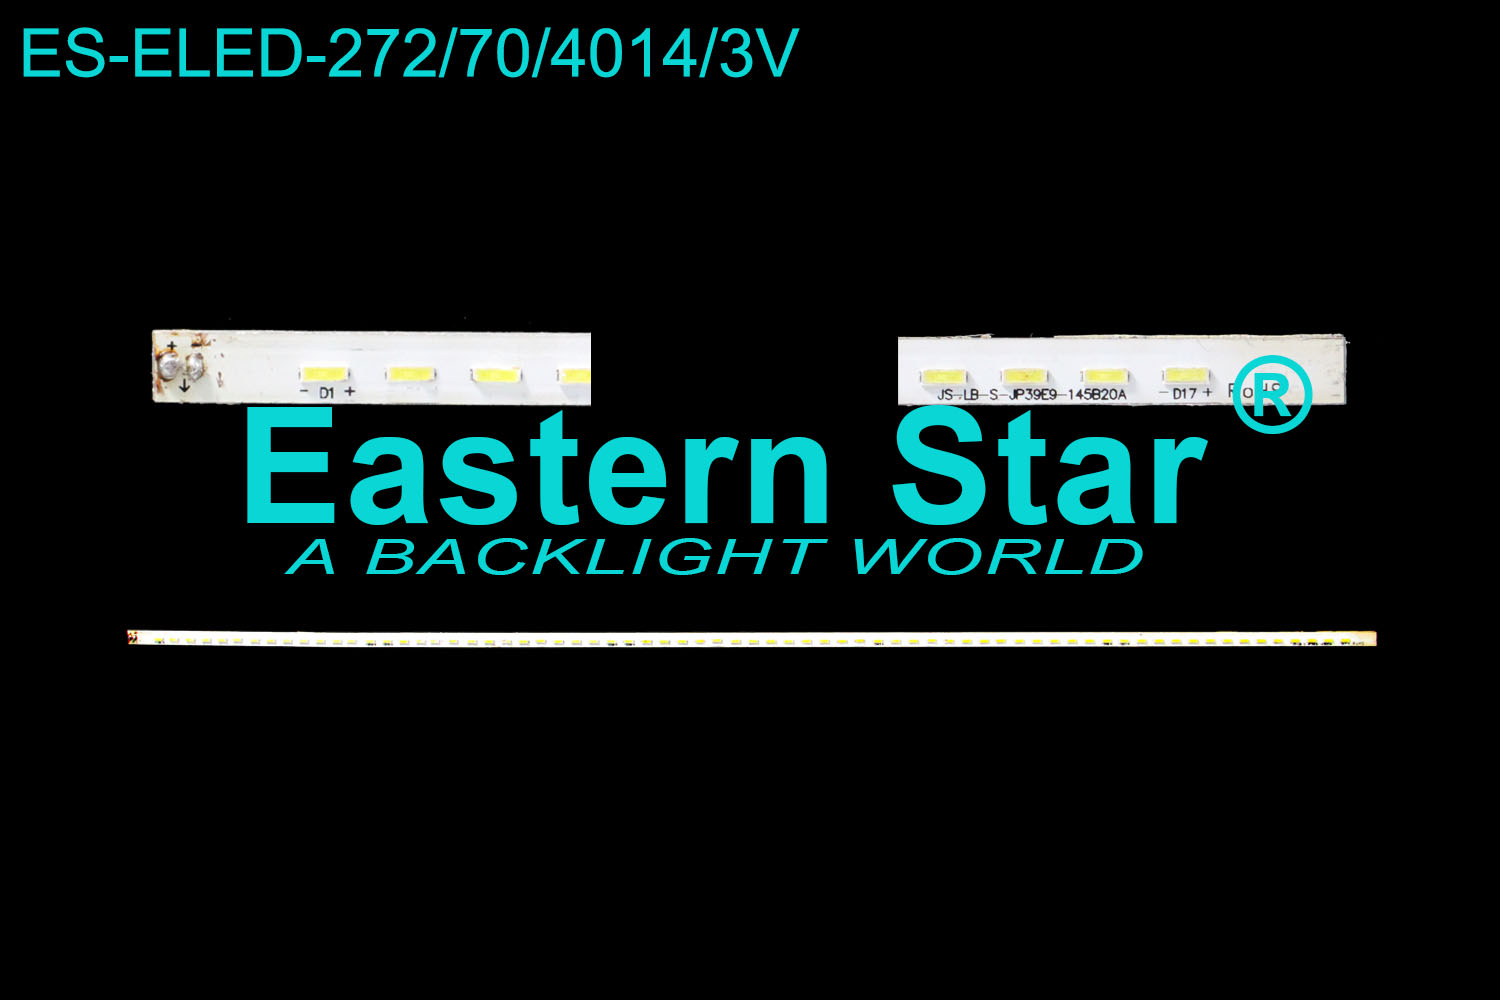 ES-ELED-272 ELED/EDGE TV backlight use for 39'' JS-LB-S-JP39E9-145820A LED STRIPS(/)